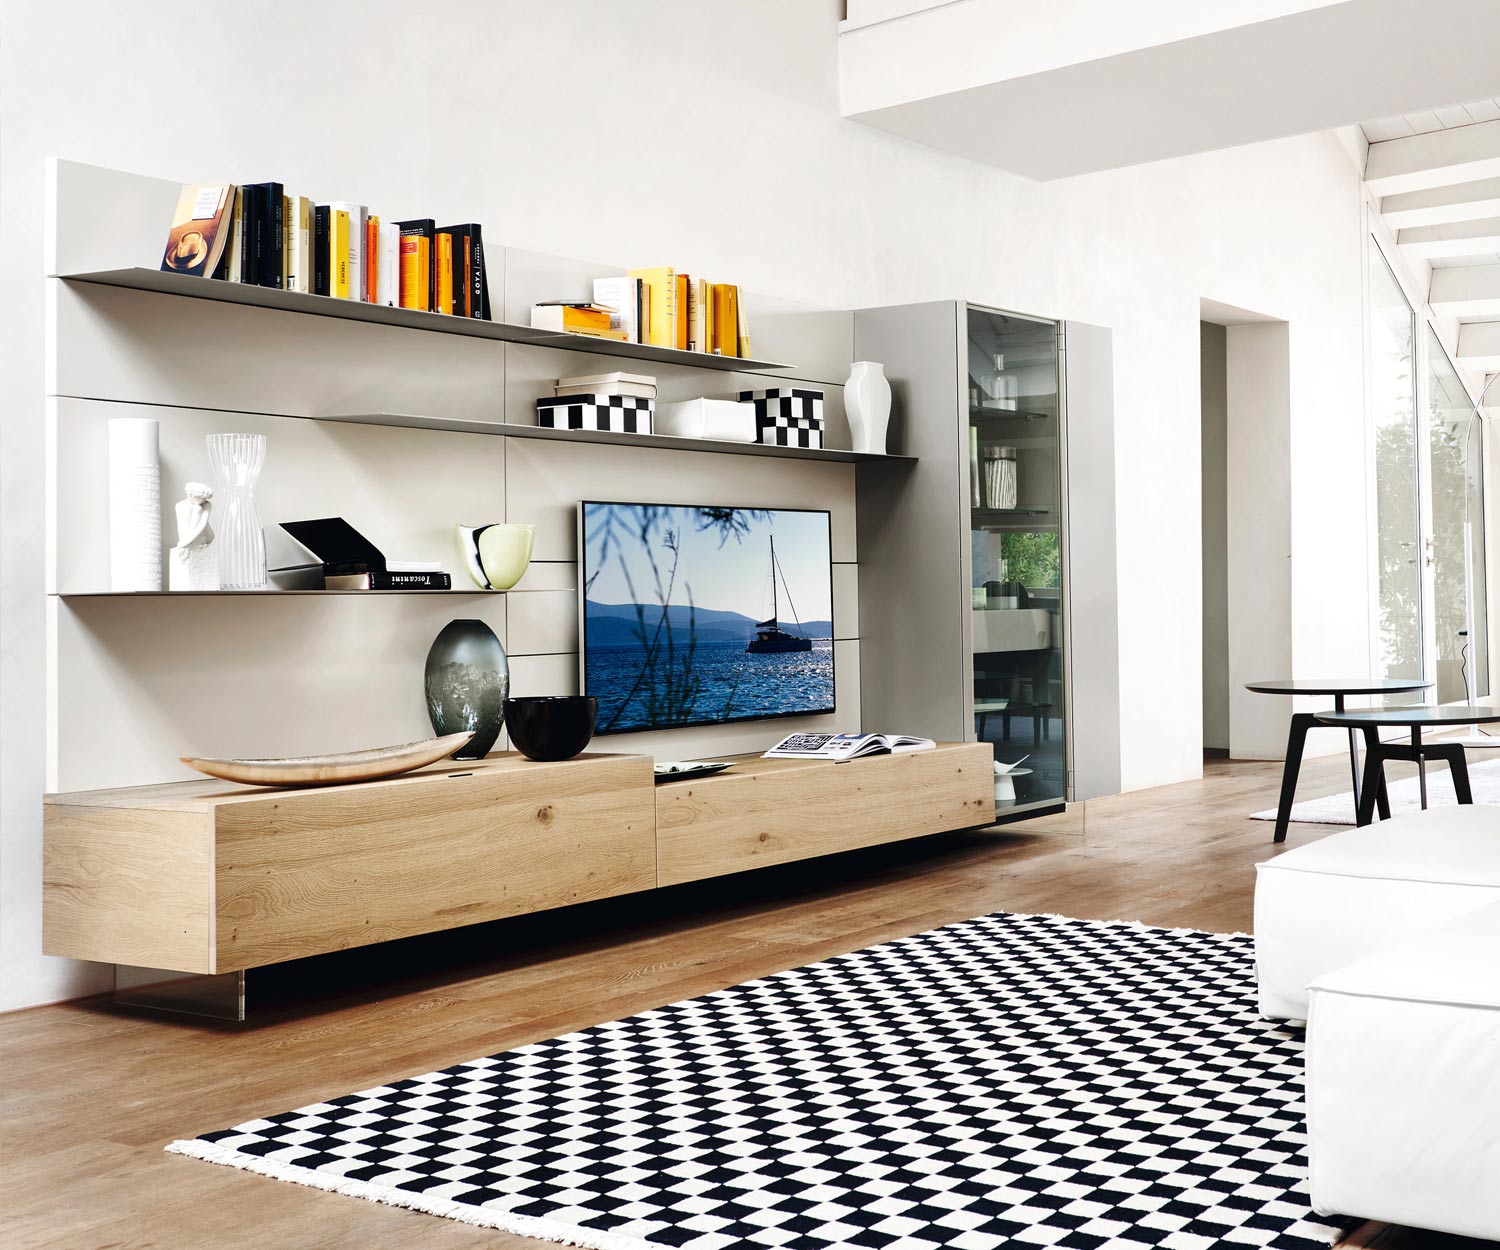 Socle design flottant pour TV en bois Design Lowboard made by Livitalia